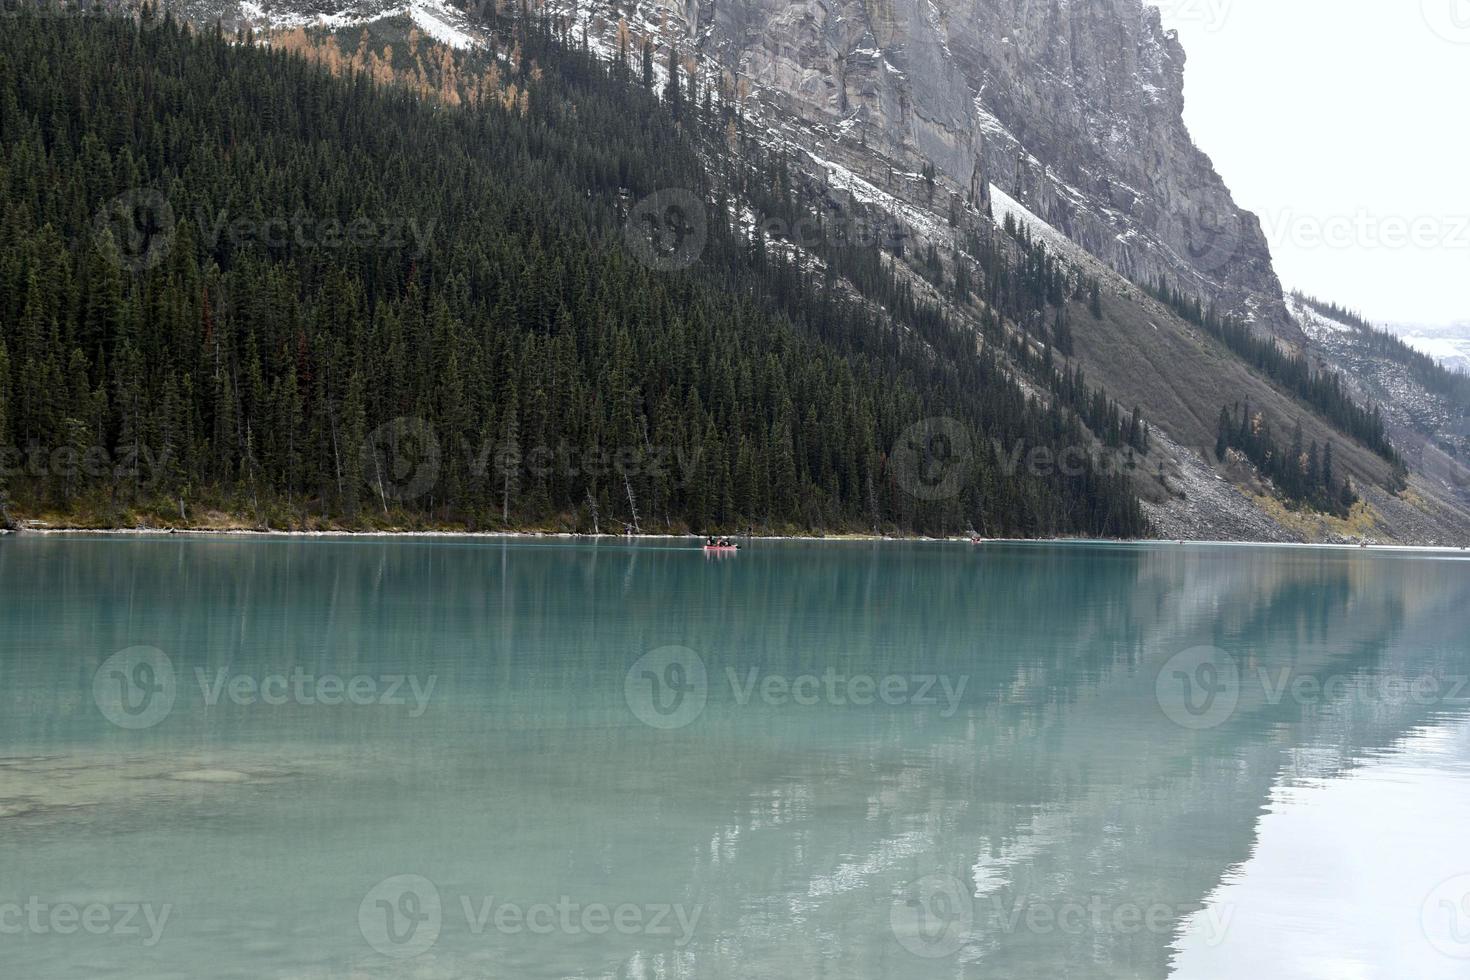 paddla kanot vid sjön louise foto